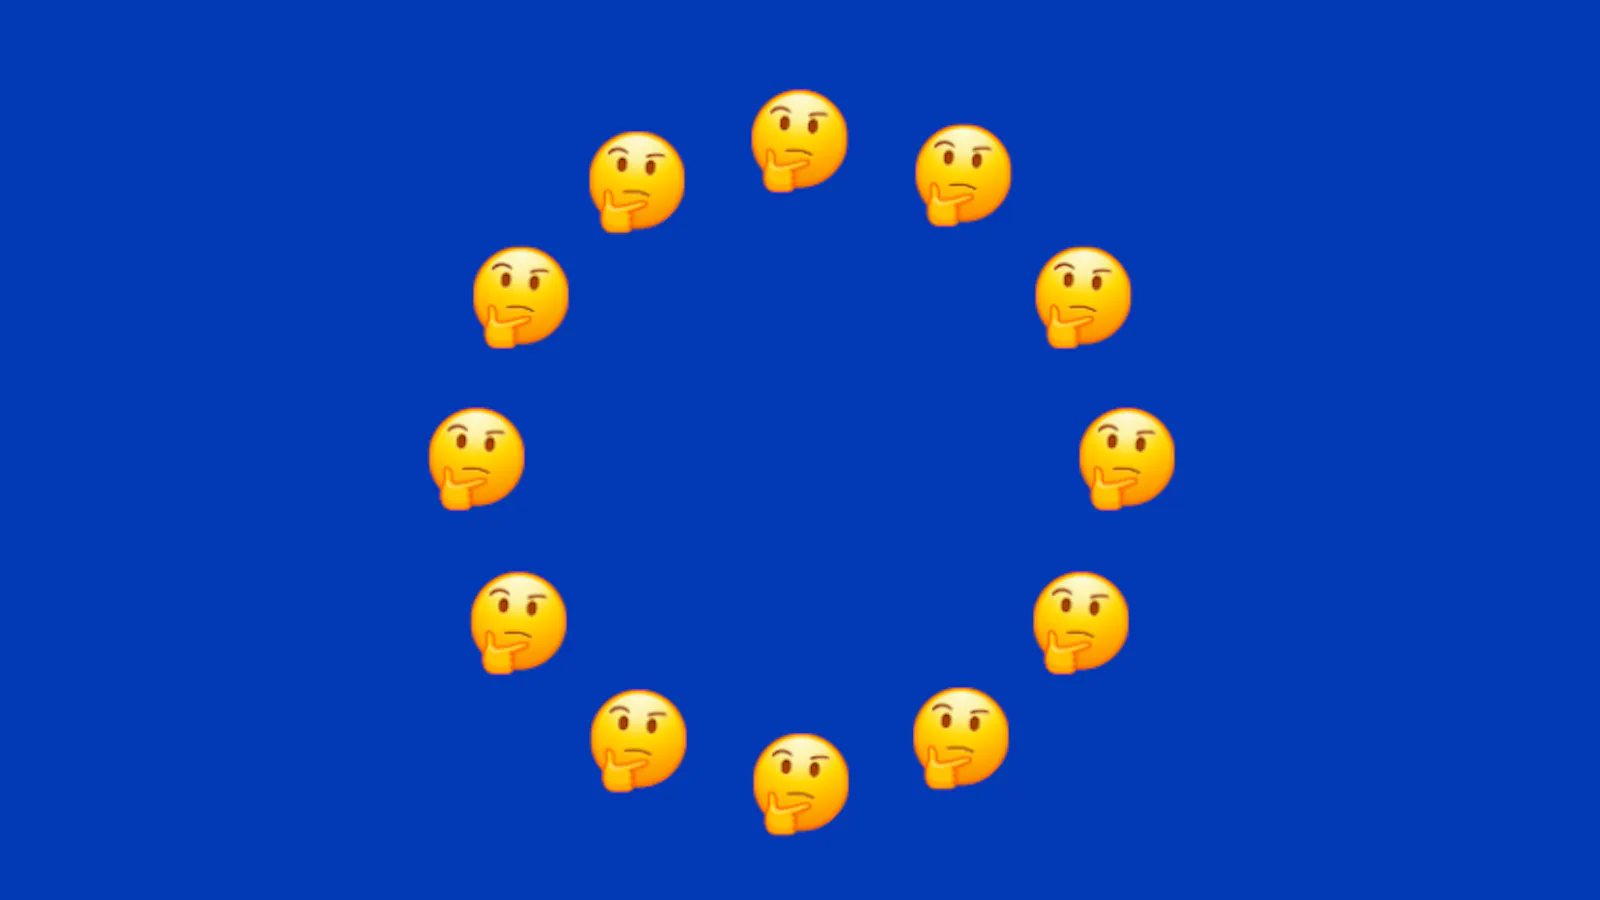 Europaflagge mit rätselnden Smileys statt Sternen